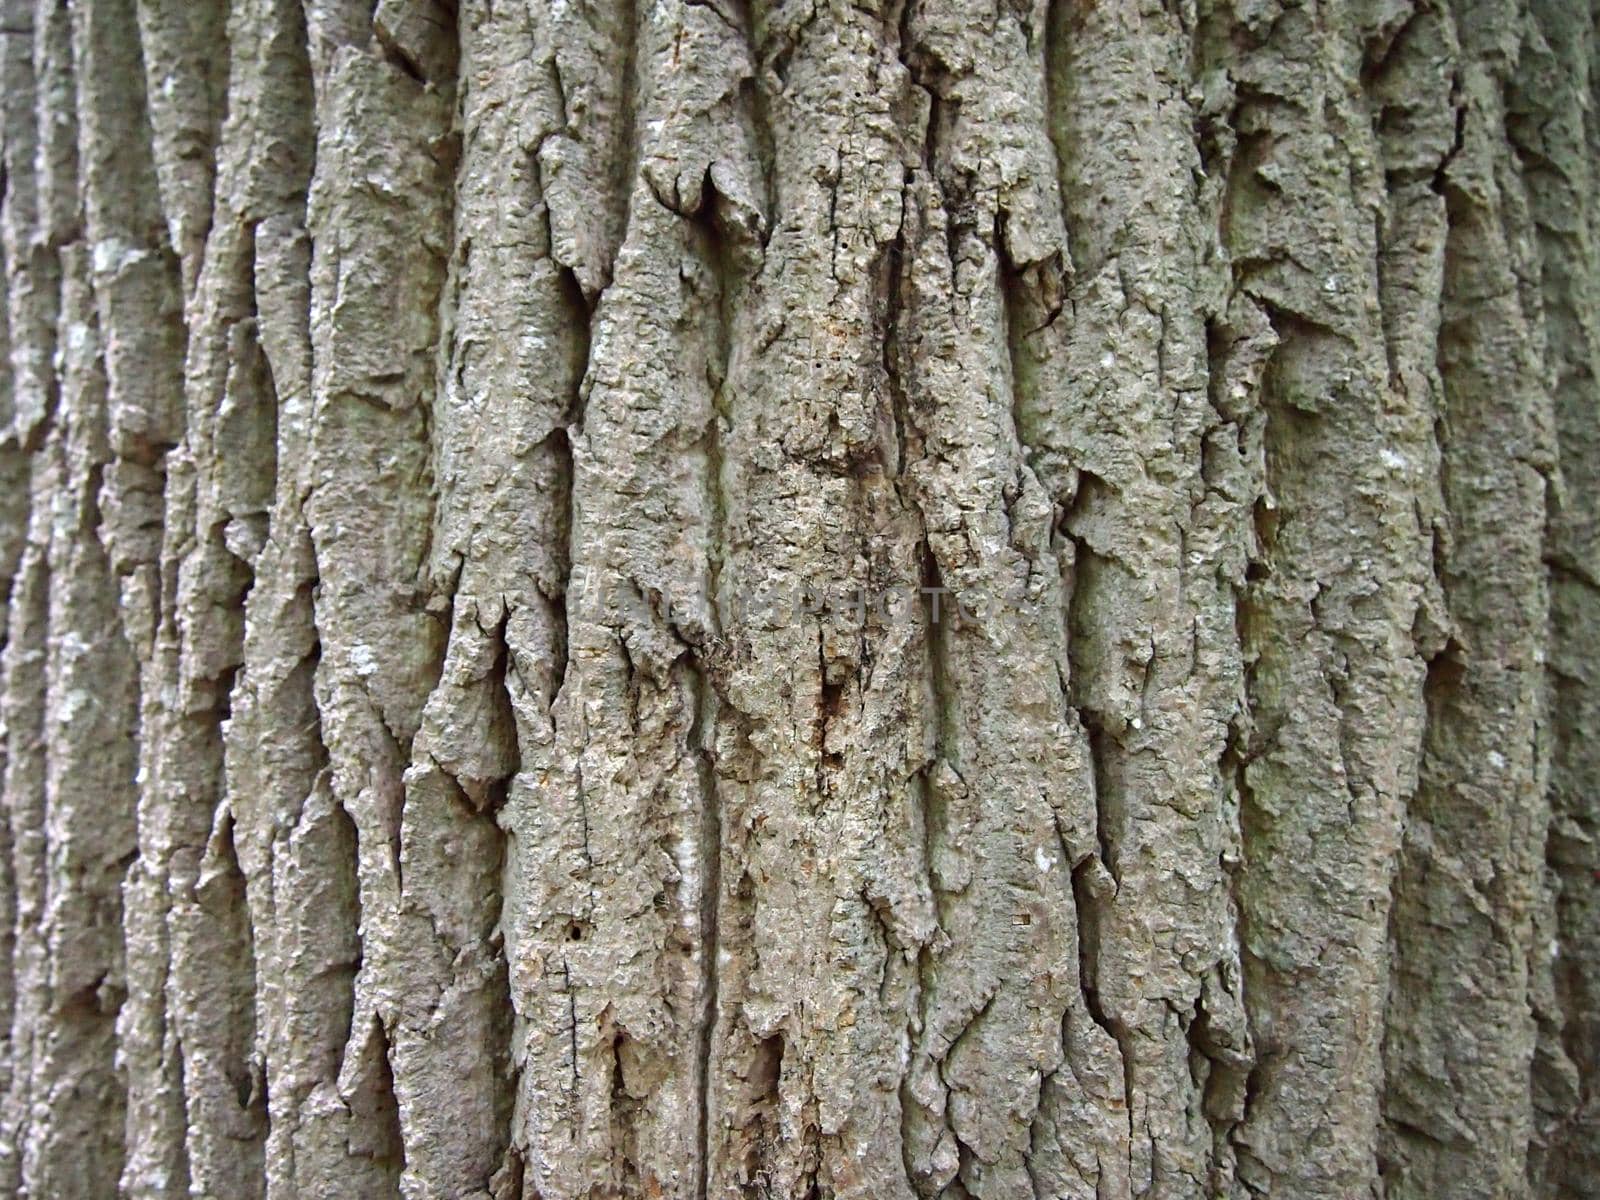 Tree Bark Close-up by EricGBVD